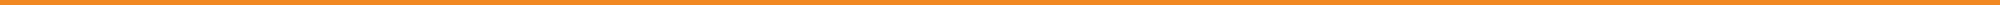 orange line 2000x5